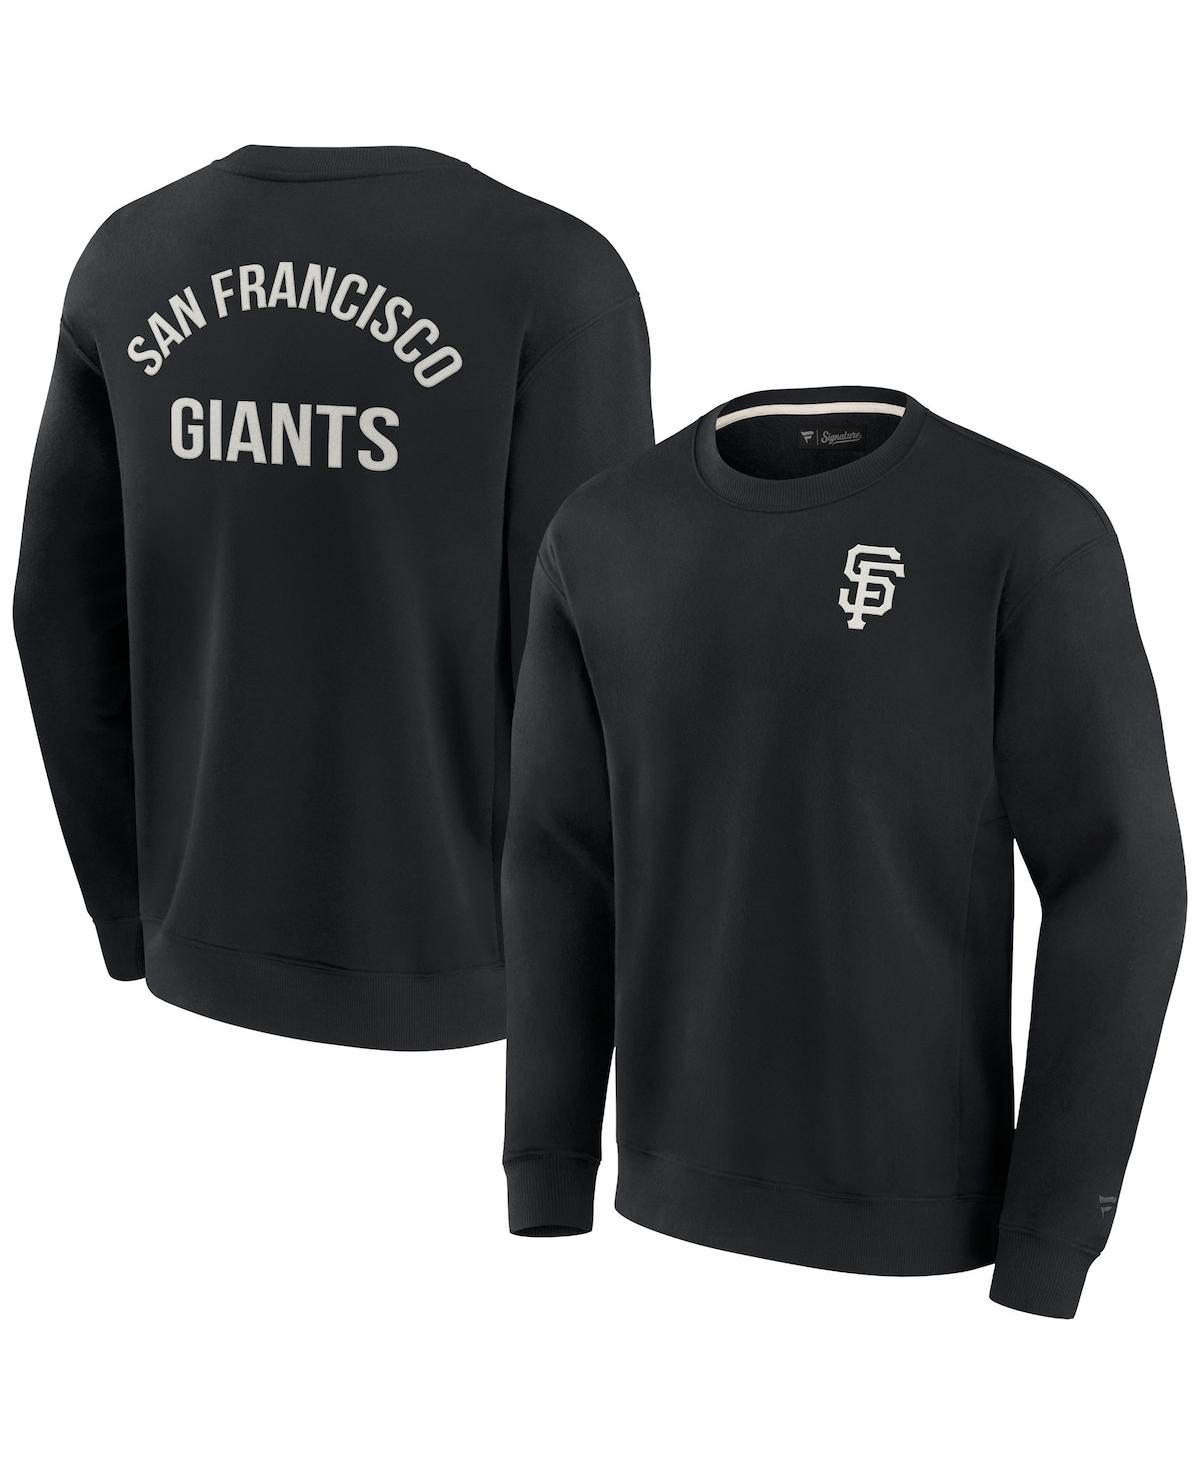 Men's and Women's Fanatics Signature Black San Francisco Giants Super Soft Pullover Crew Sweatshirt - Black